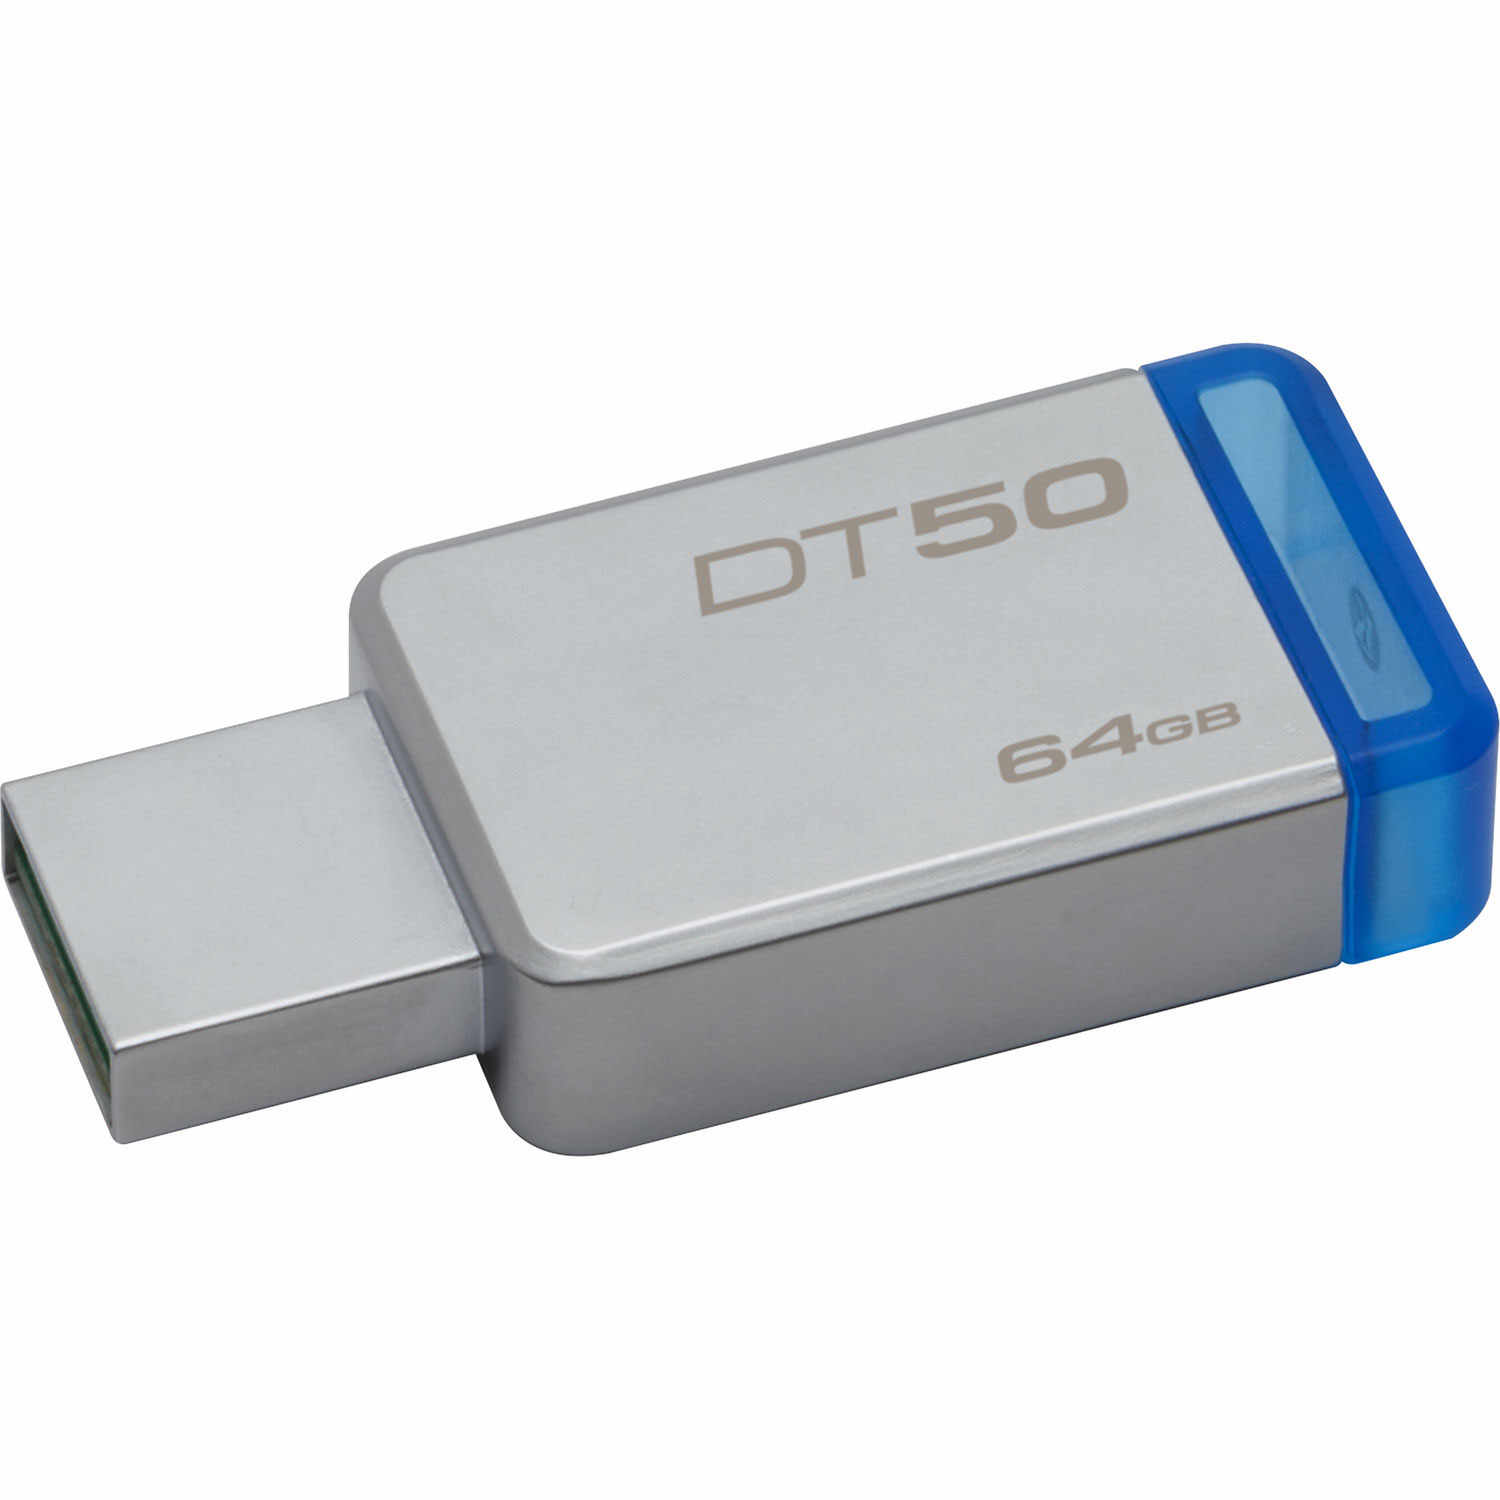 Memorie USB Kingston DT50/64GB, 64GB, USB 3.0, Gri